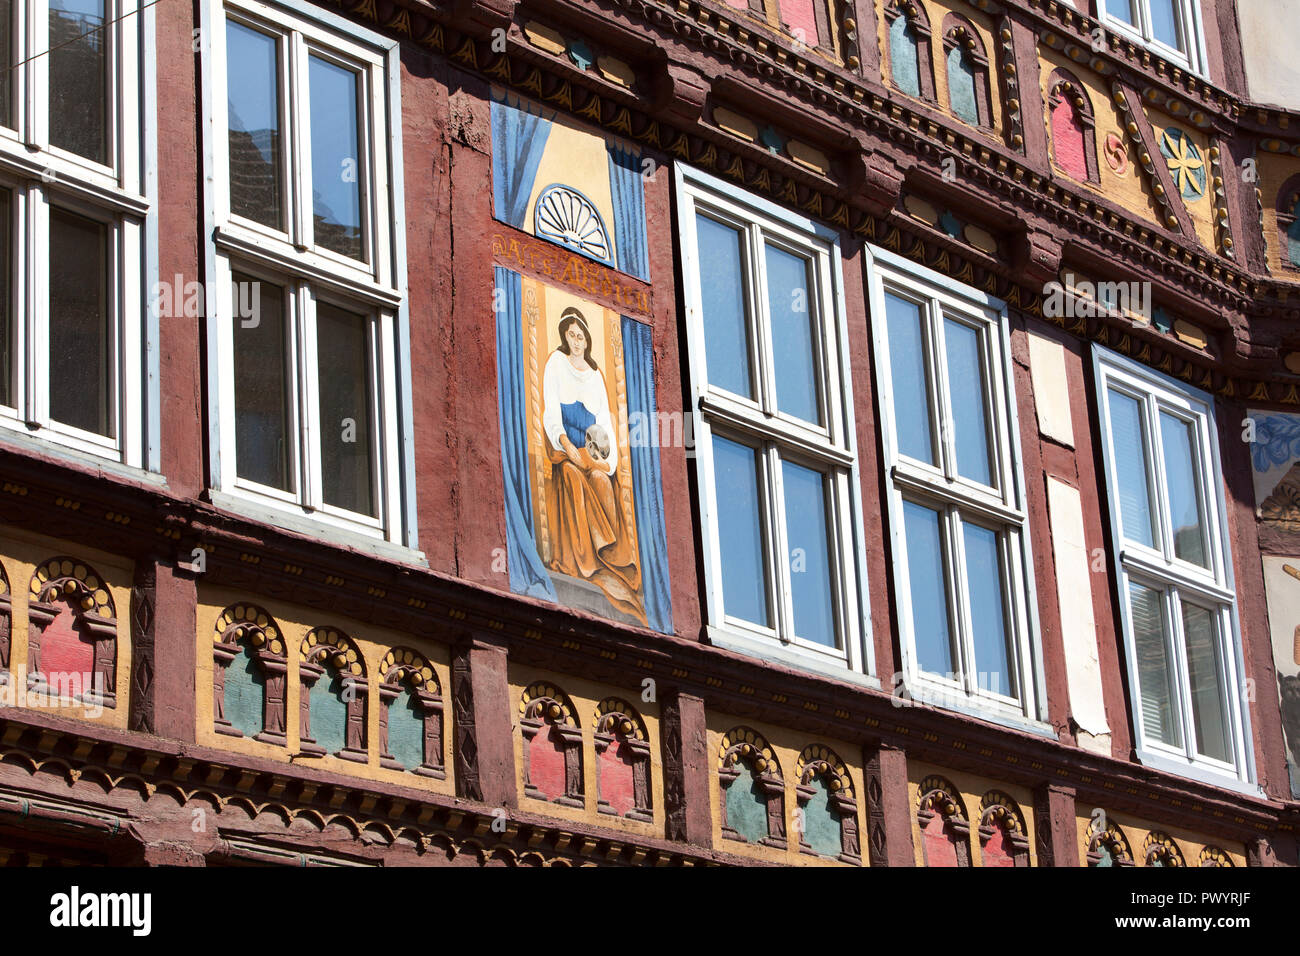 Mural painting, Apothekenstreet, Duderstadt, Lower Saxony, Germany, Europe Stock Photo